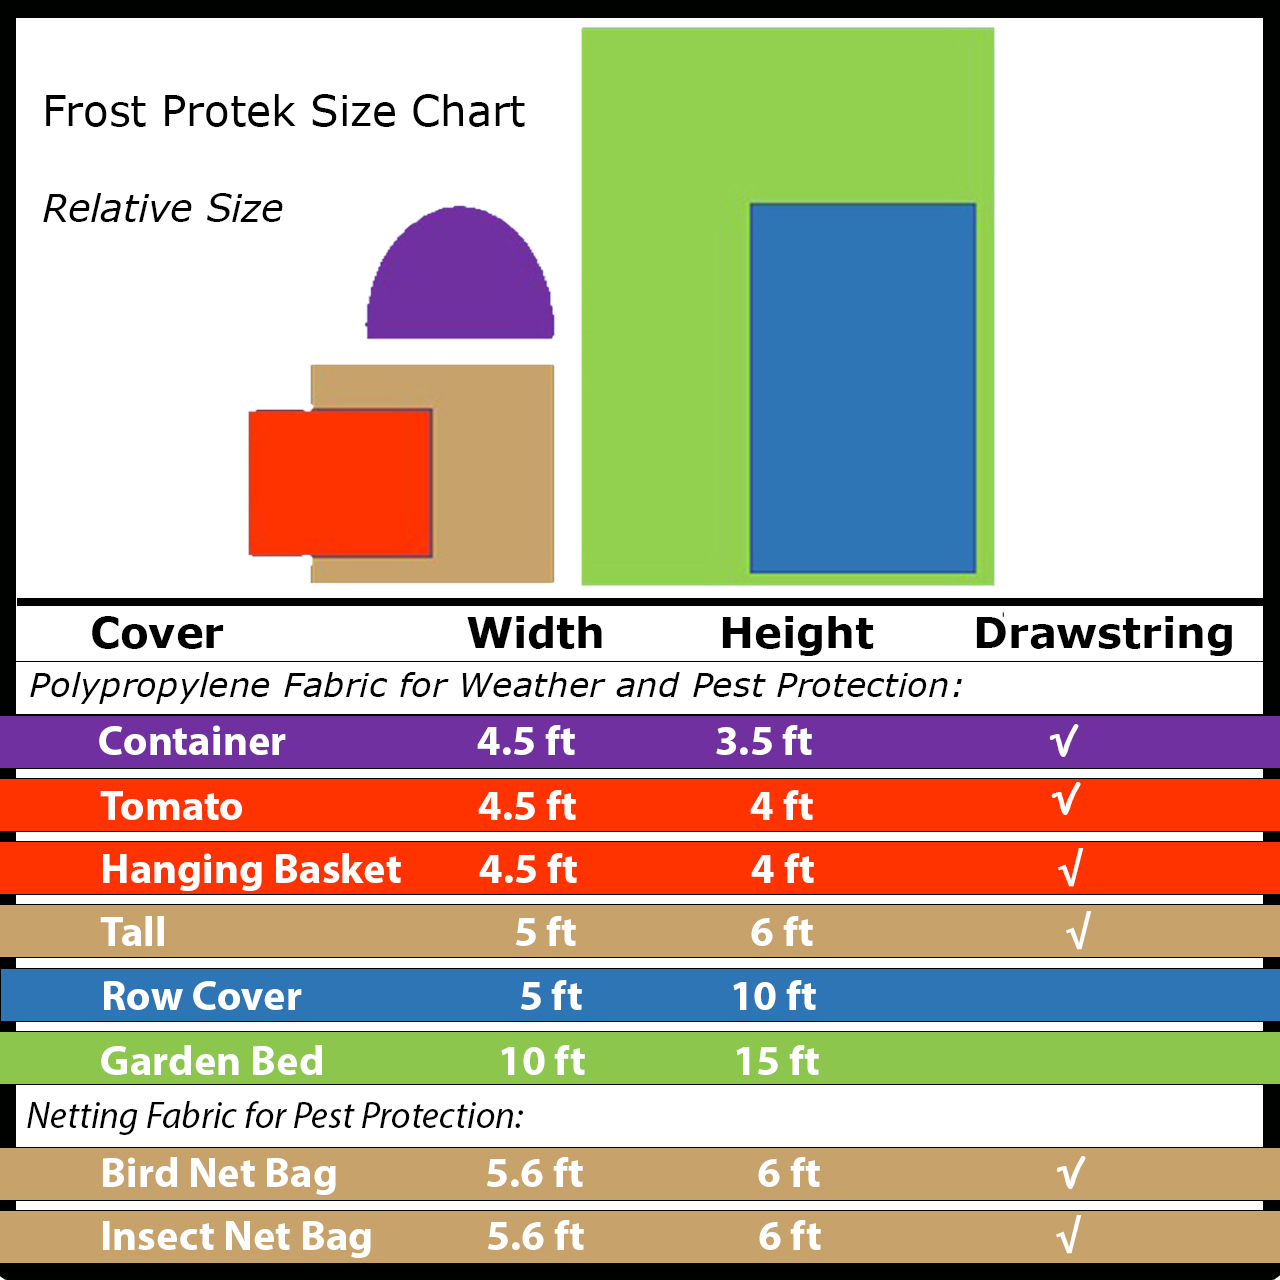 frost-protek-size-chart.jpg